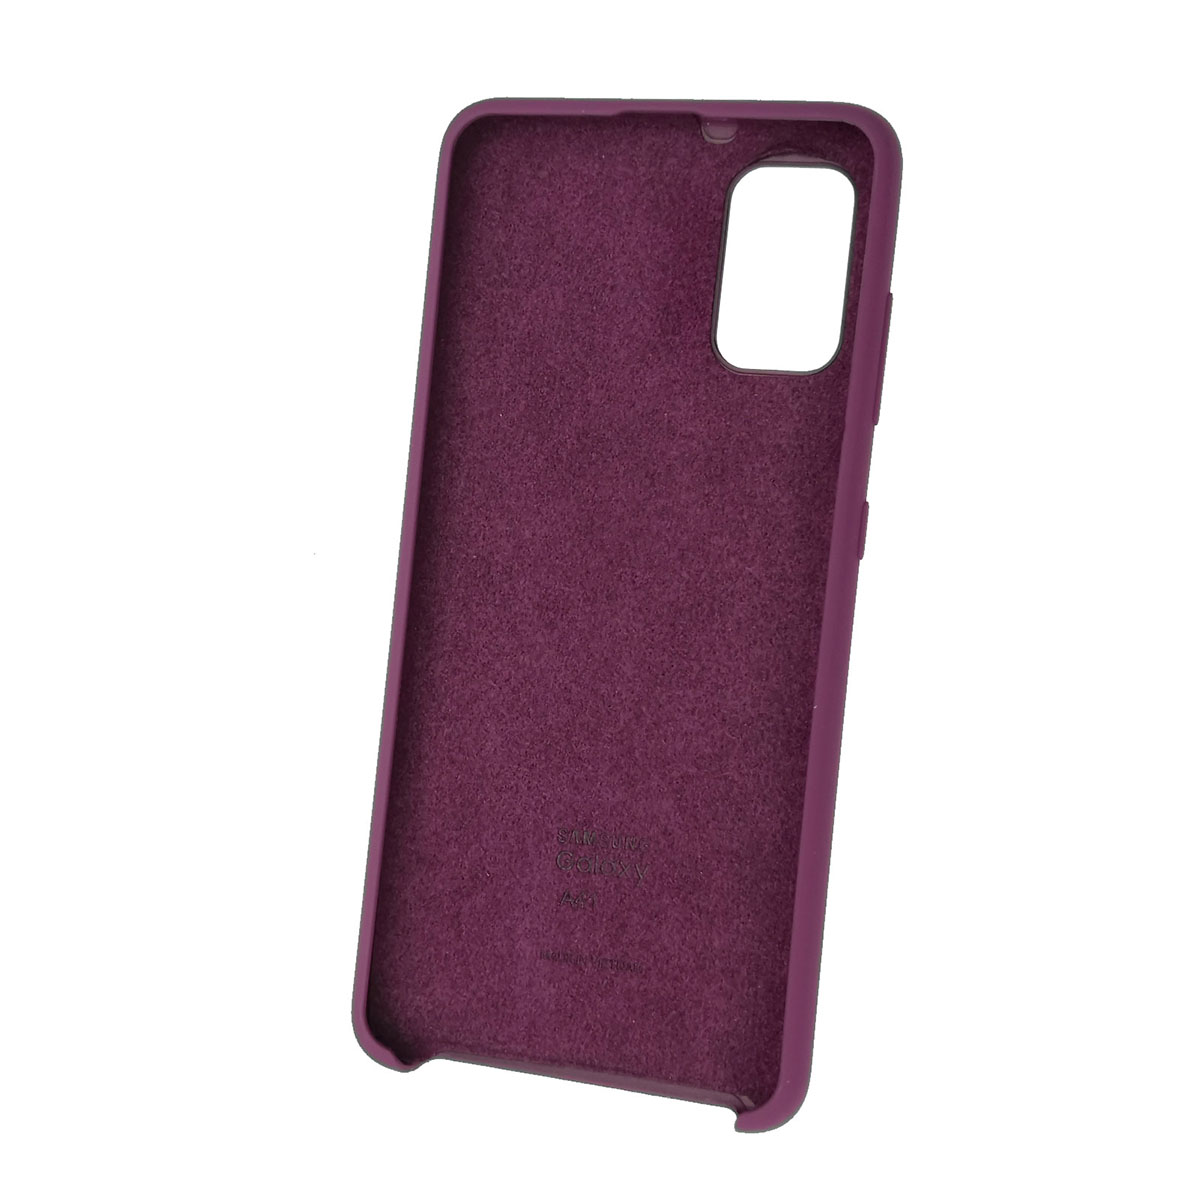 Чехол накладка Silicon Cover для SAMSUNG Galaxy A41 (SM-A415), силикон, бархат, цвет баклажан.